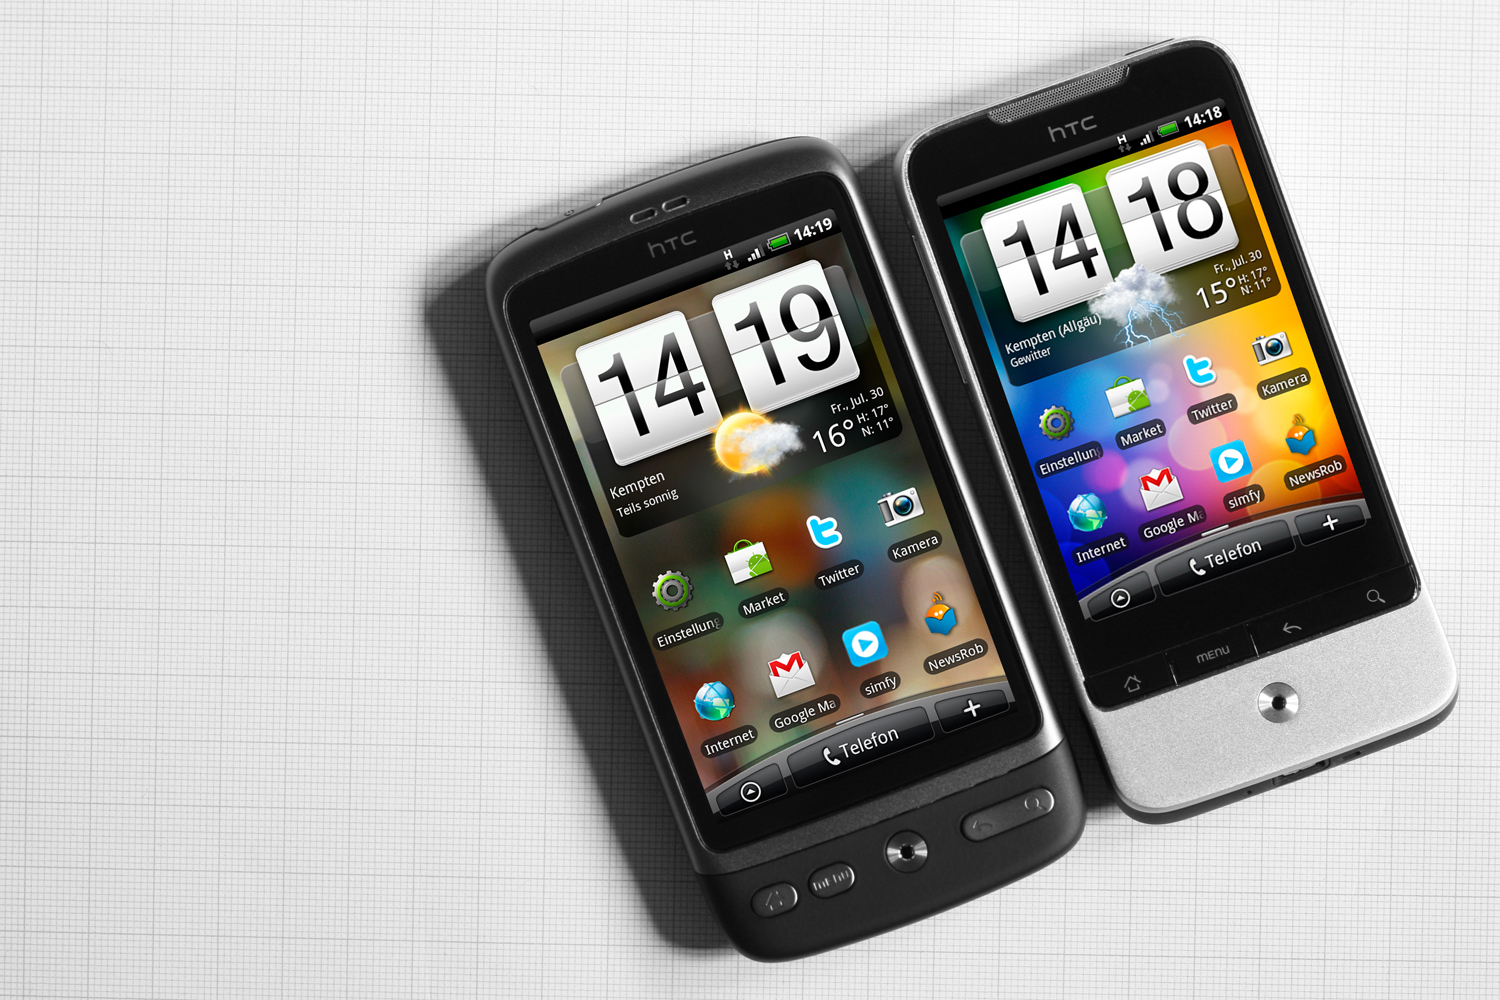 HTC Legend vs HTC Desire